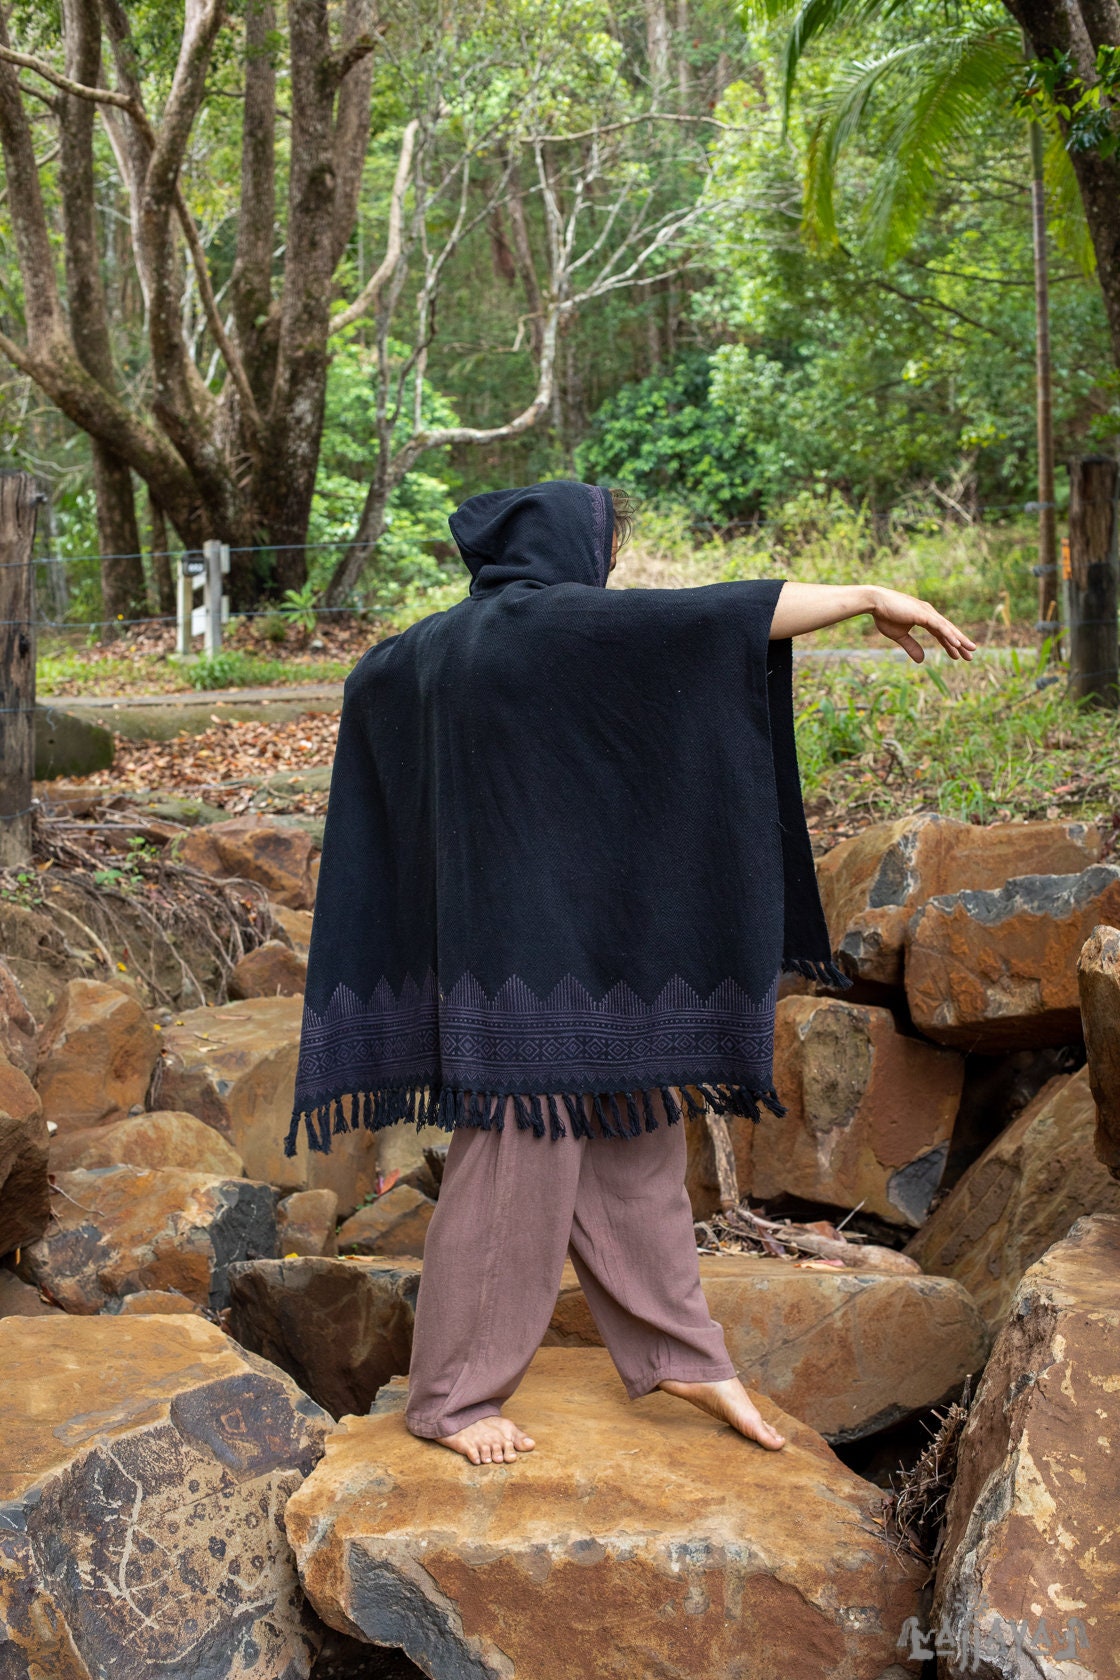 ANAGAMI Black Hooded Kimono Cape Poncho Robe Block Printed Natural Dyed Ceremony Ritual Shaman Tribal Alchemy Sacred Shawl Festival AJJAYA